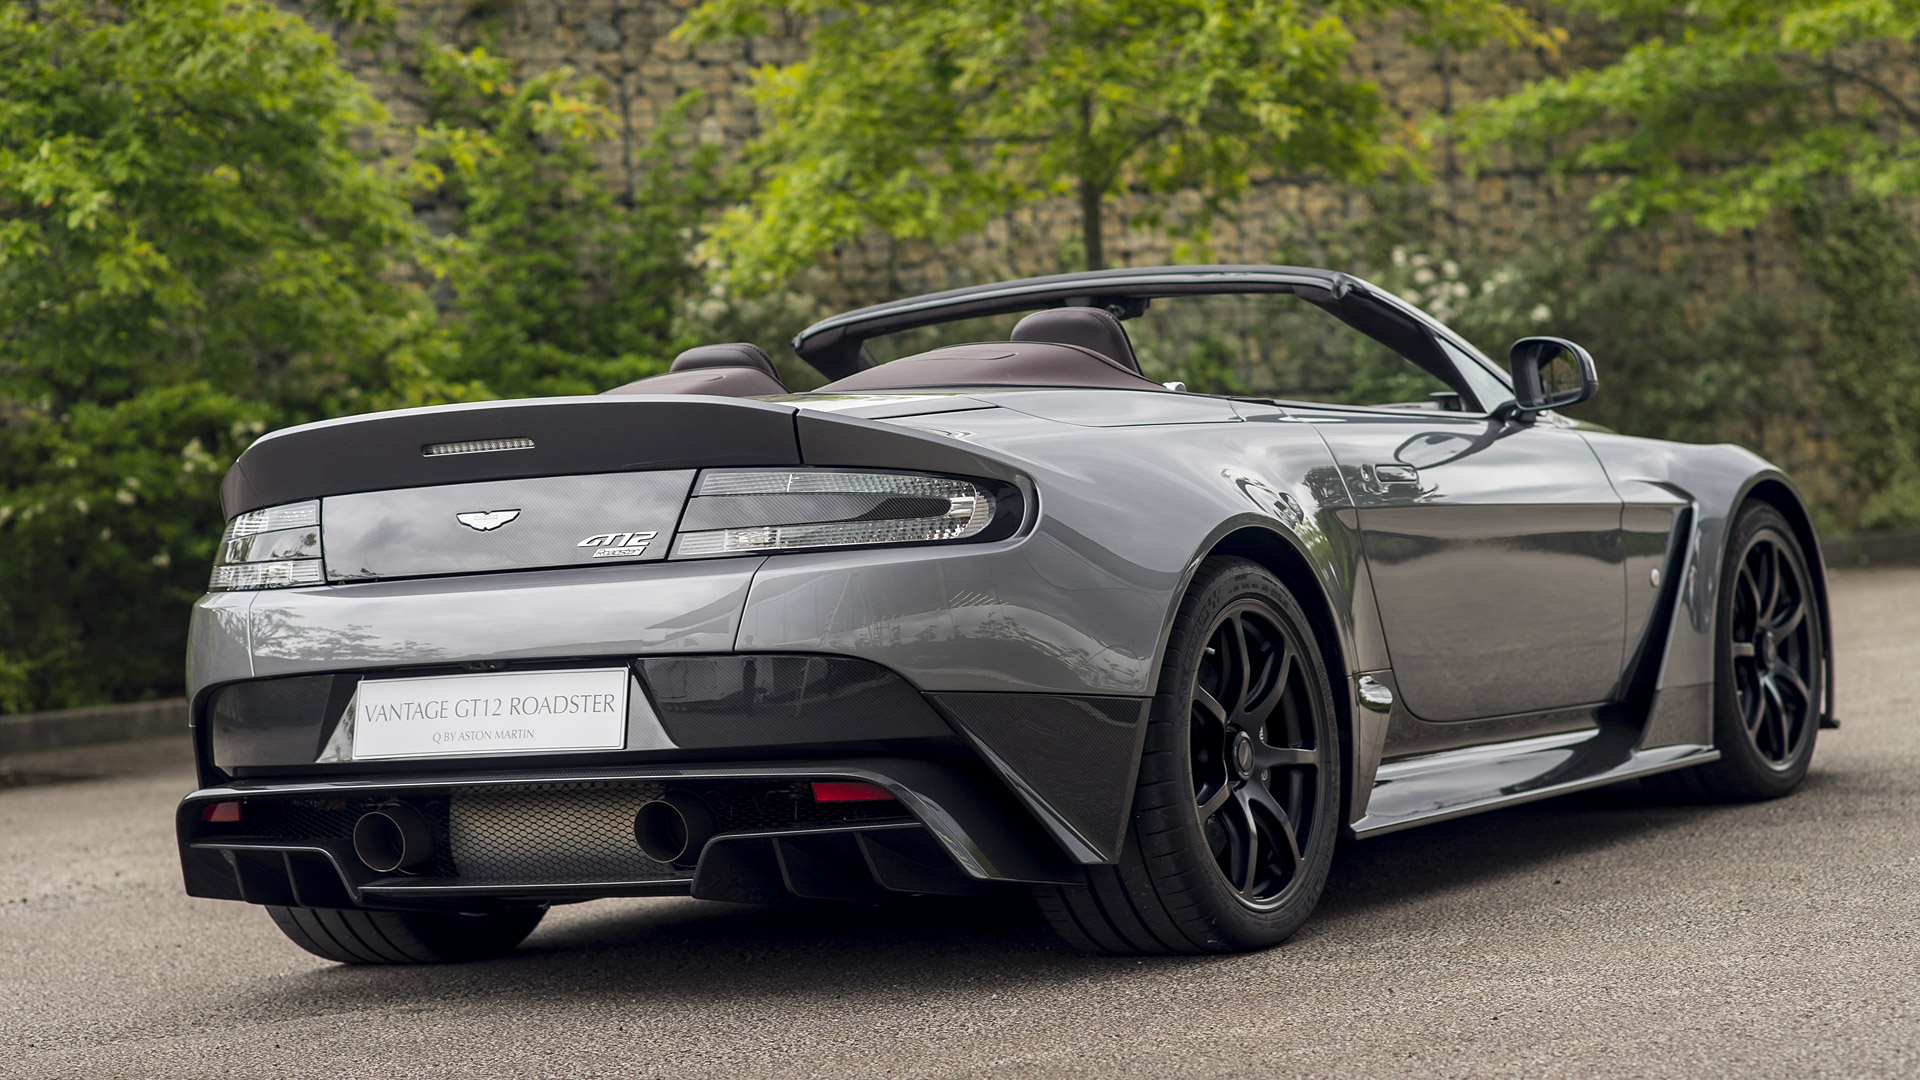  2016 Aston Martin Vantage GT12 Roadster= Wallpaper.